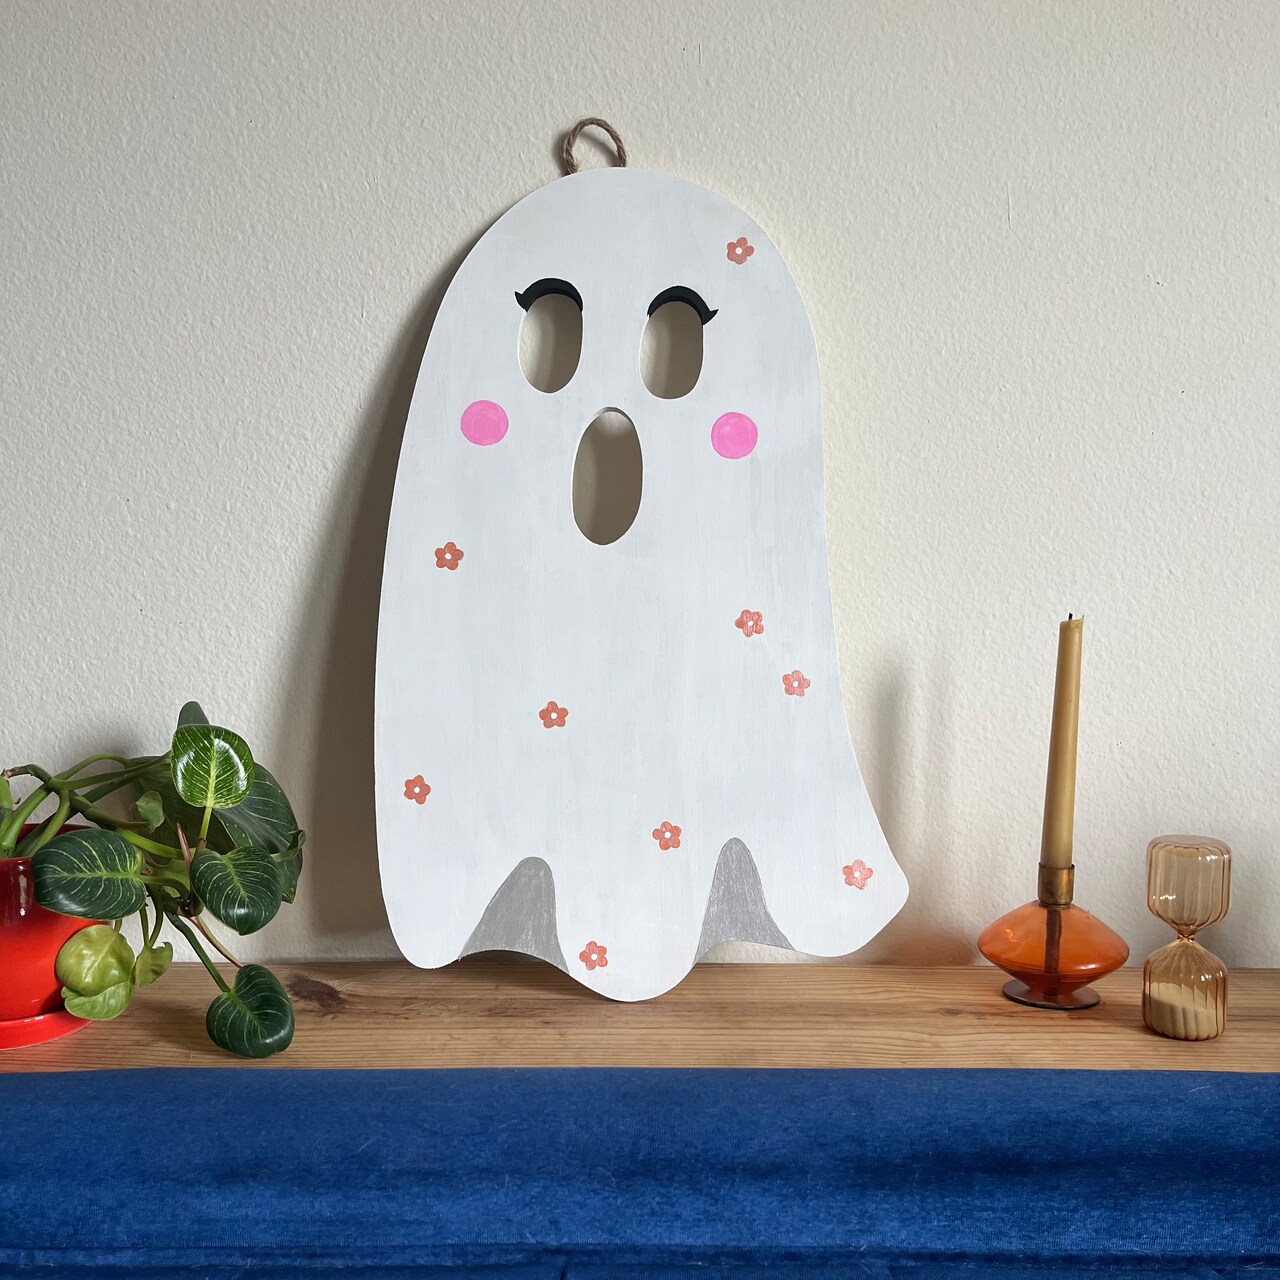 Crafting Basics: Painted Wood Halloween Decor with @ProbablySketch